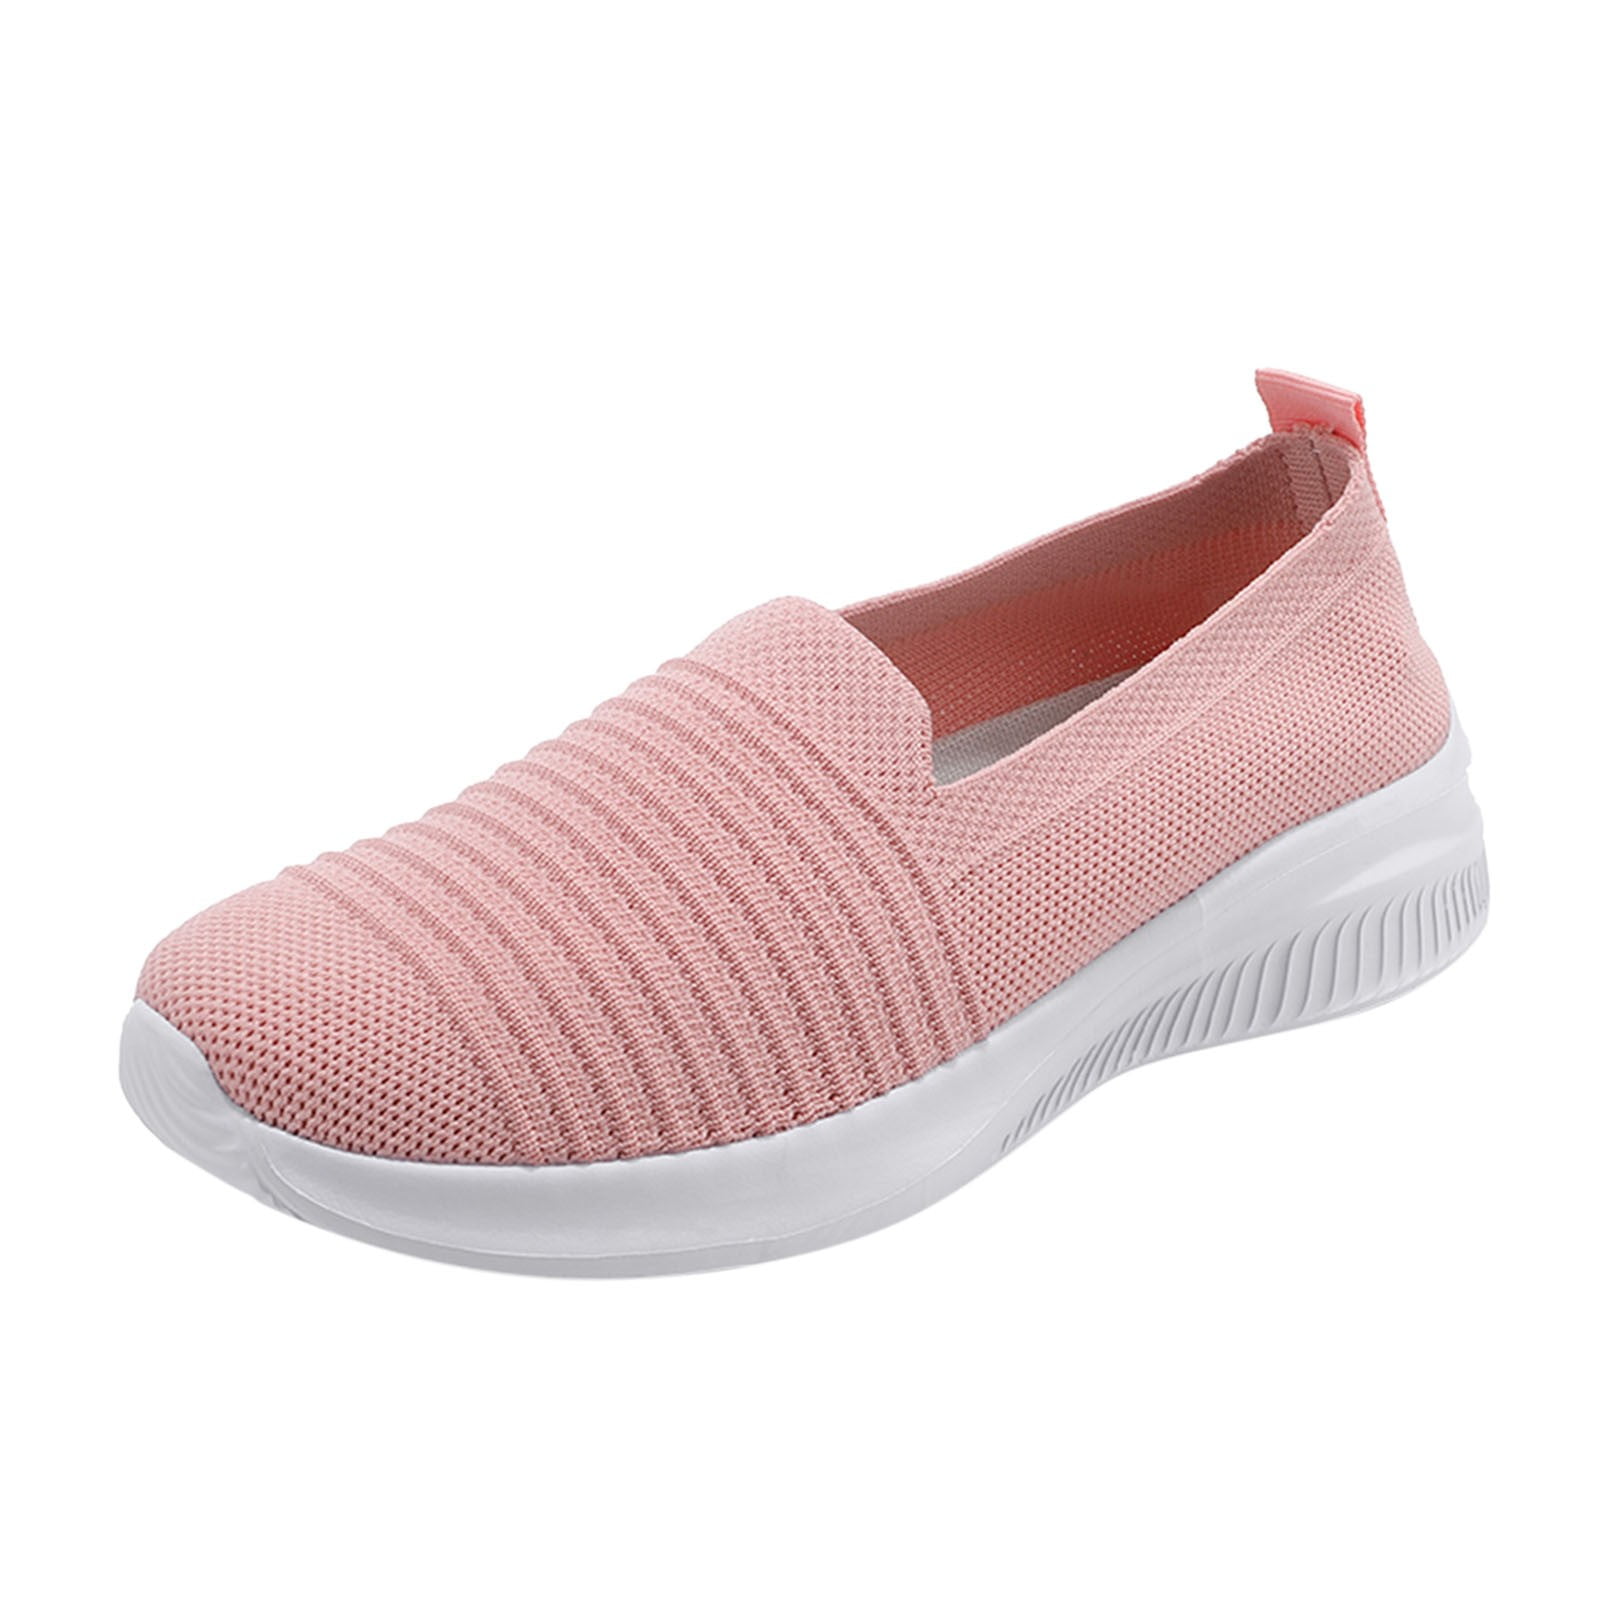 Sopiago Womens Tennis Shoes Women’s Slip-On Colorblocked Athletic ...